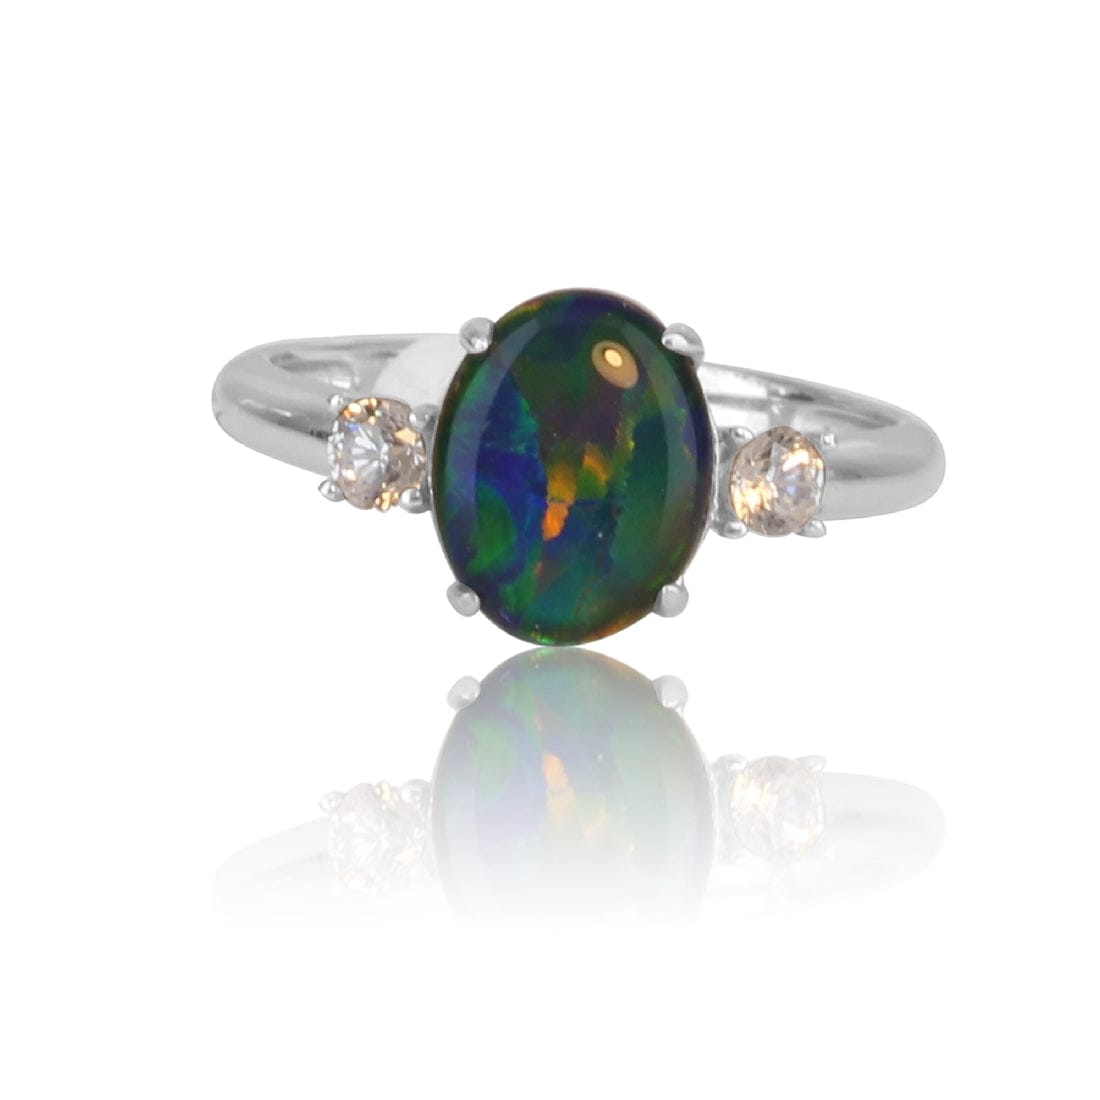 Sterling Silver Opal triplet and cubic zirconia ring - Masterpiece Jewellery Opal & Gems Sydney Australia | Online Shop